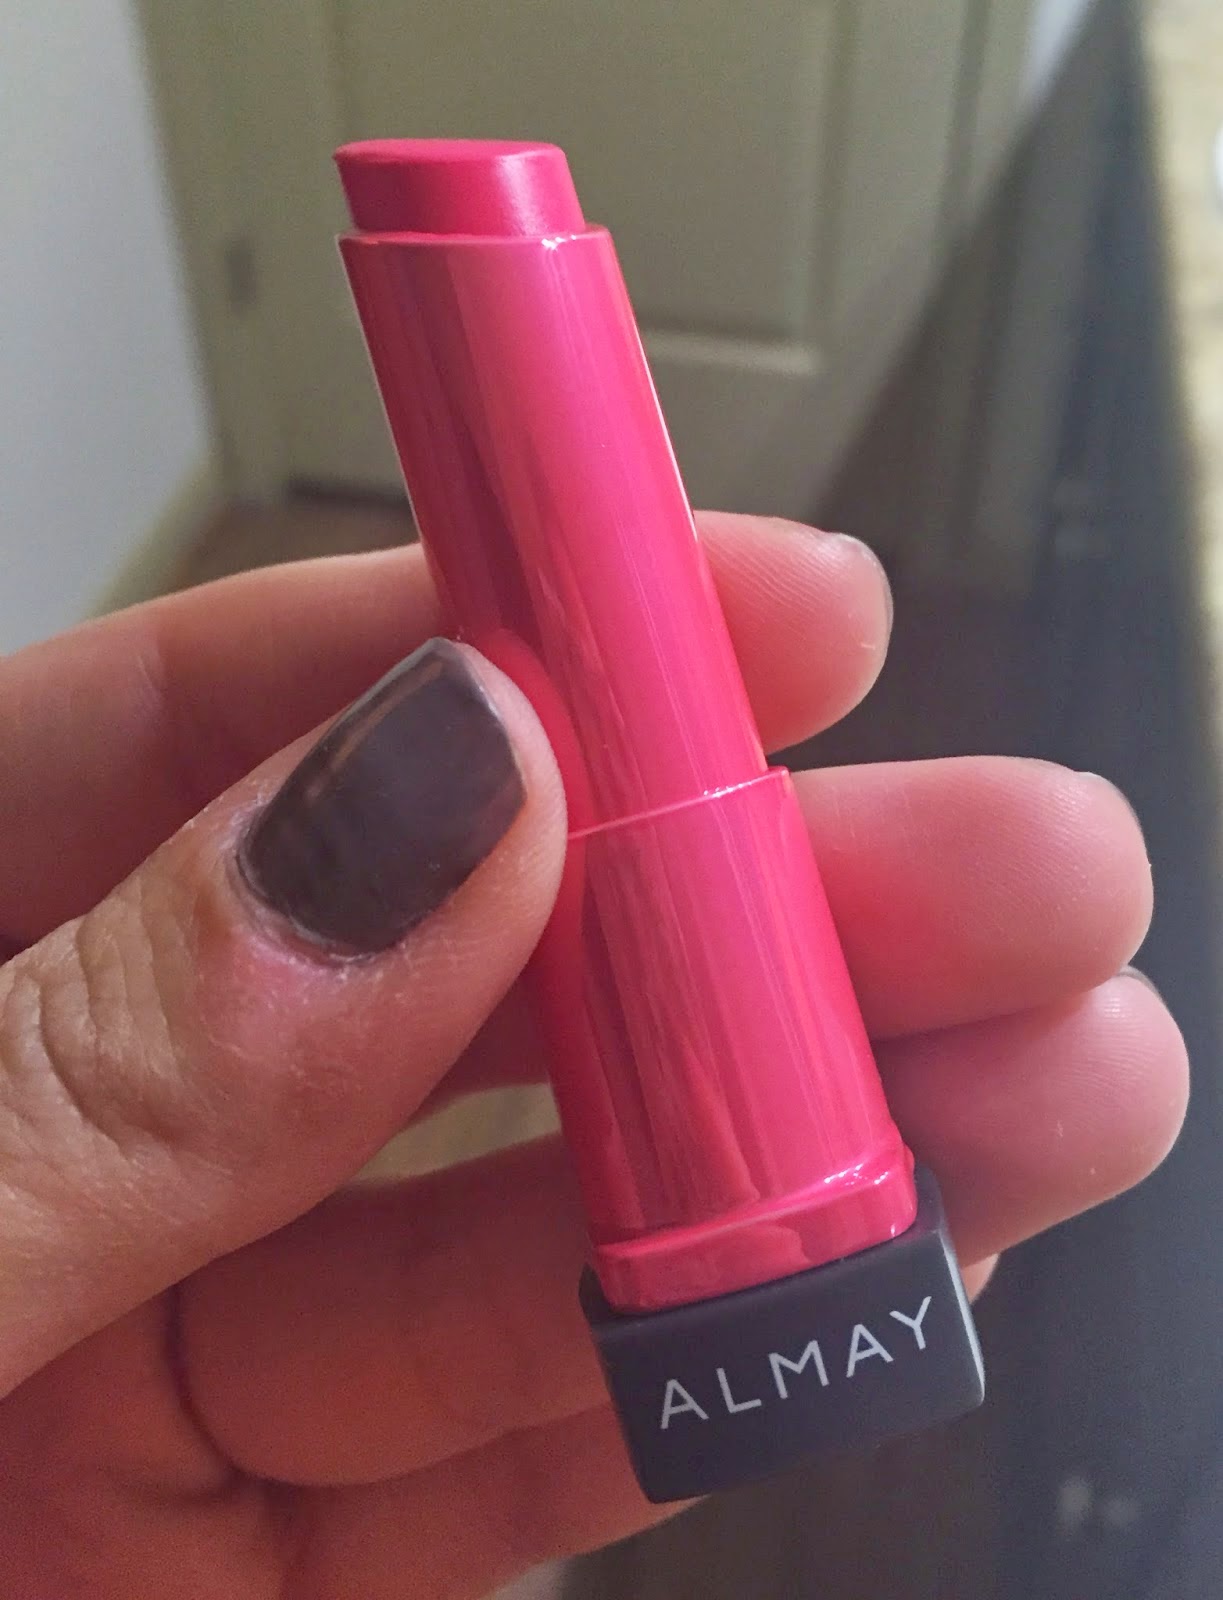 Almay lipstick